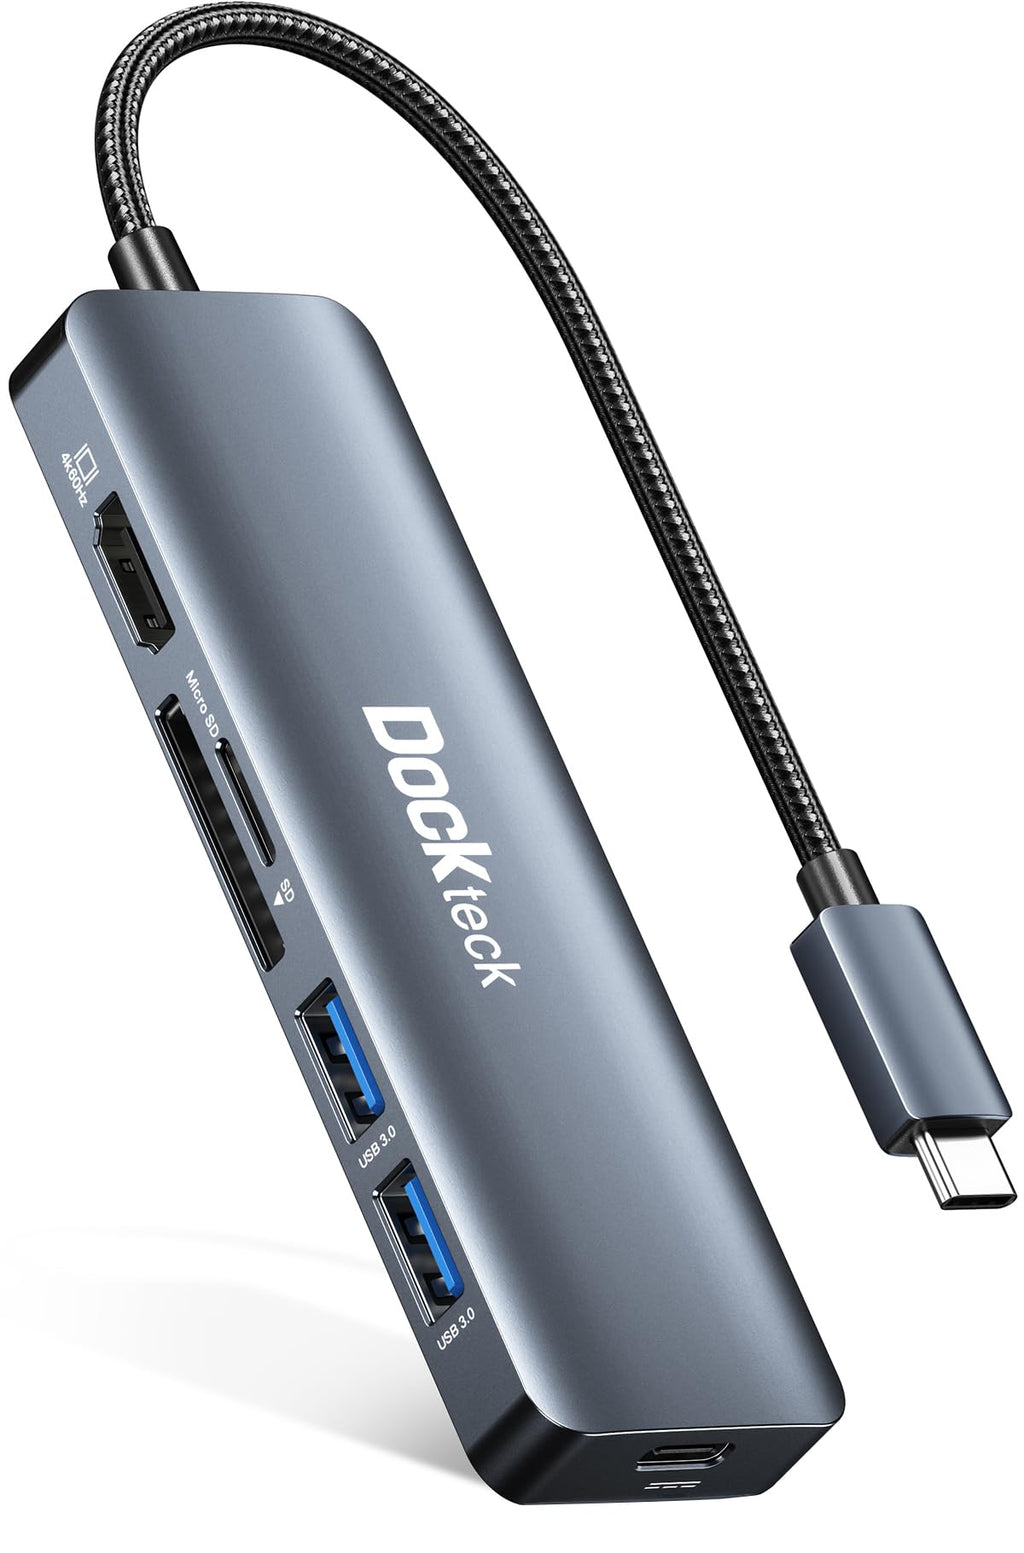  [AUSTRALIA] - USB C Hub Multiport Adapter - Dockteck 6 in 1 USB C Dock with 100W PD, 4K 60Hz HDMI, USB 3.0, SD/TF Card Reader, USBC Hub for MacBook Pro Air Microsoft Surface Pro